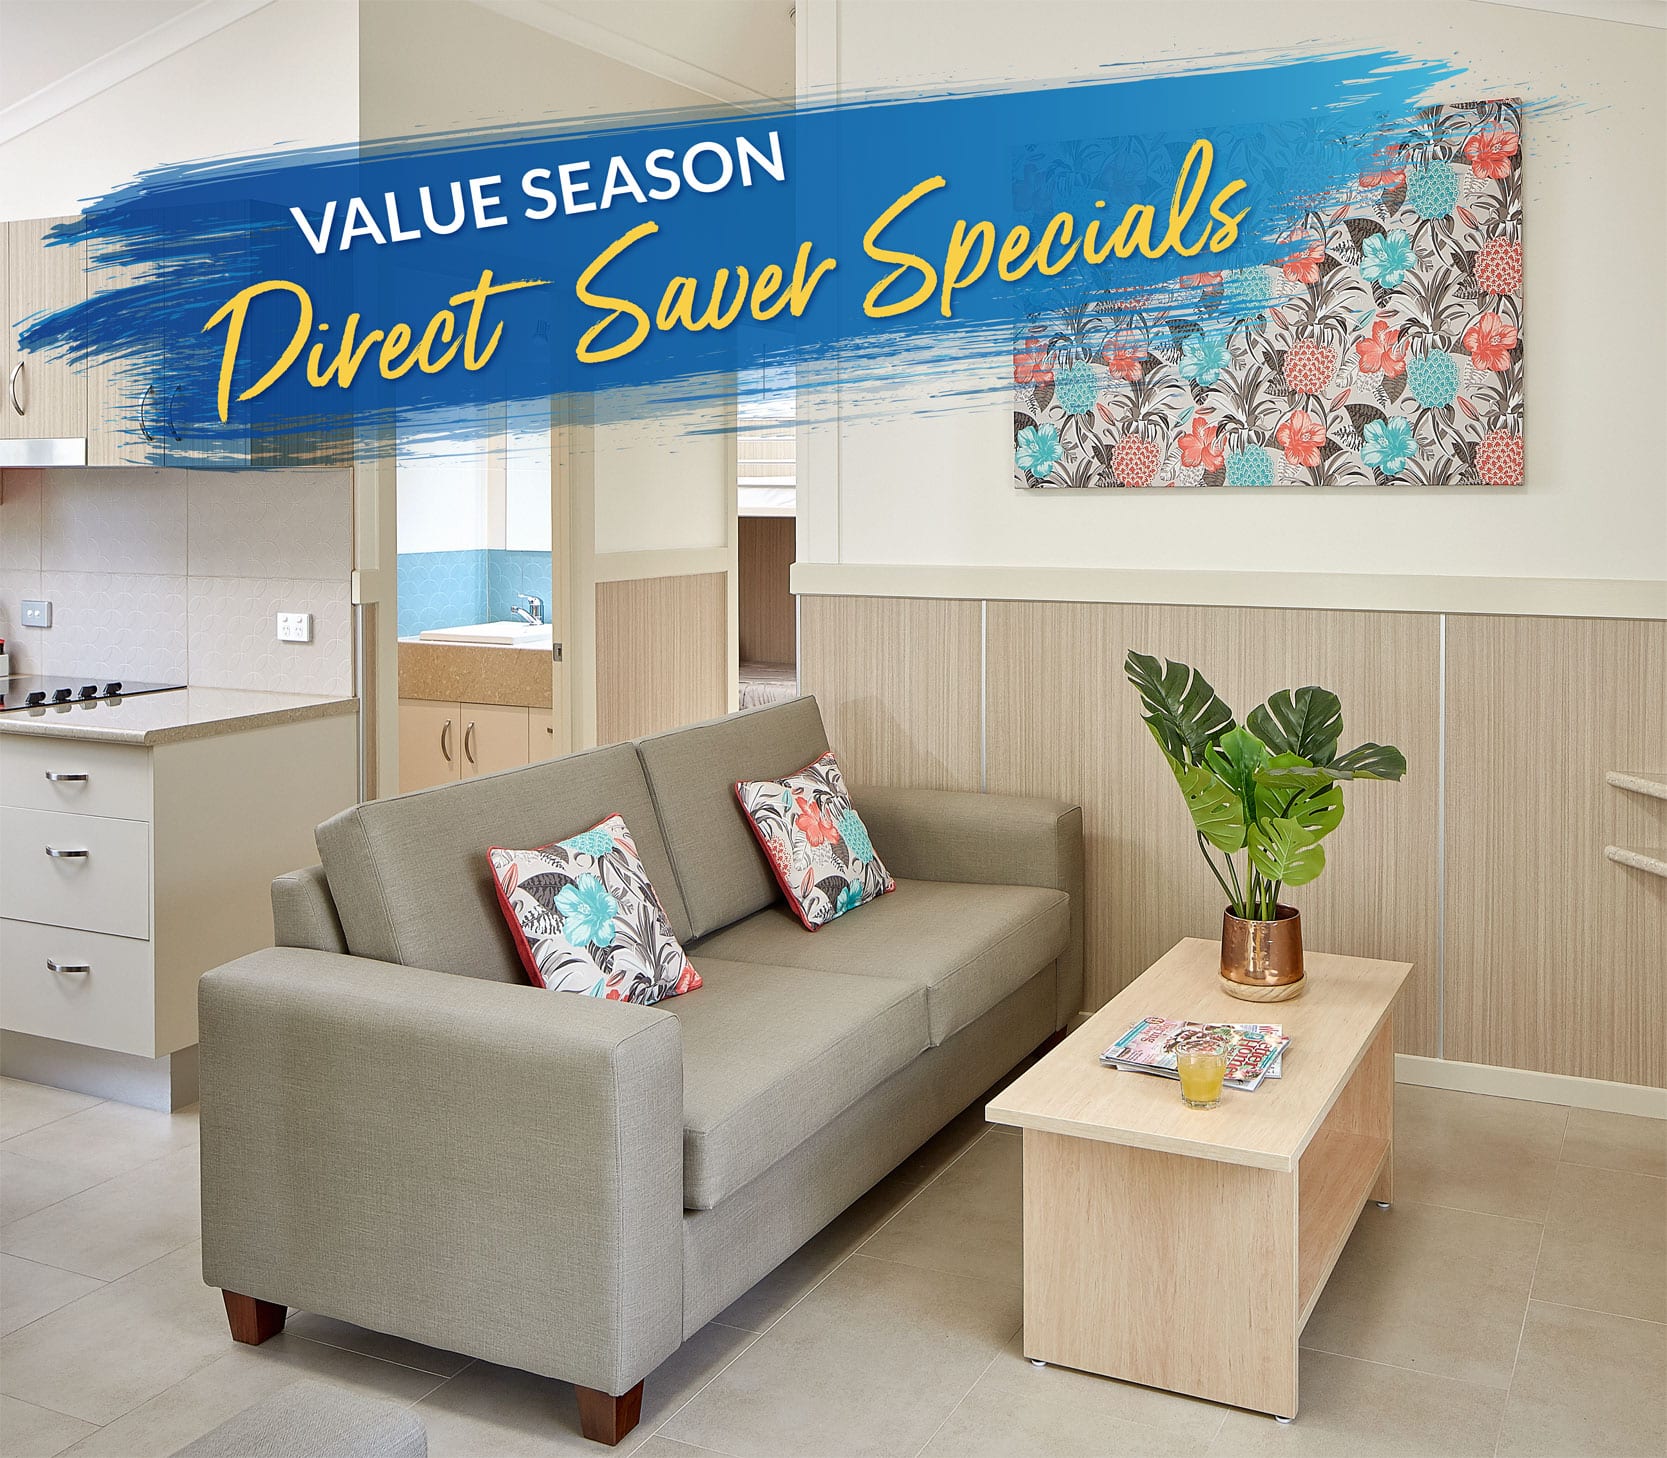 Direct Saver Gold Coast Holiday Specials at Ashmore Palms